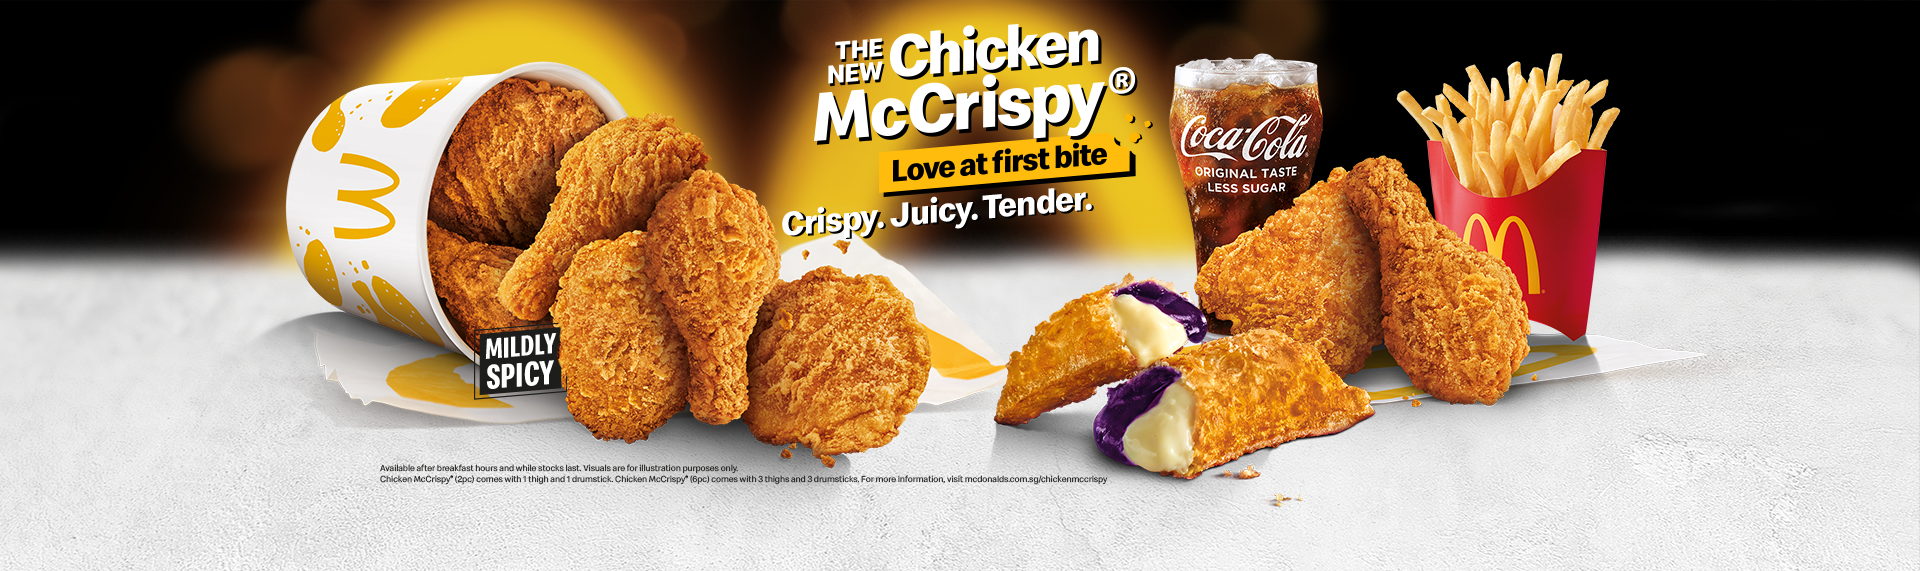 Chicken McCrispy® / PHOTO - McDonald’s® Singapore